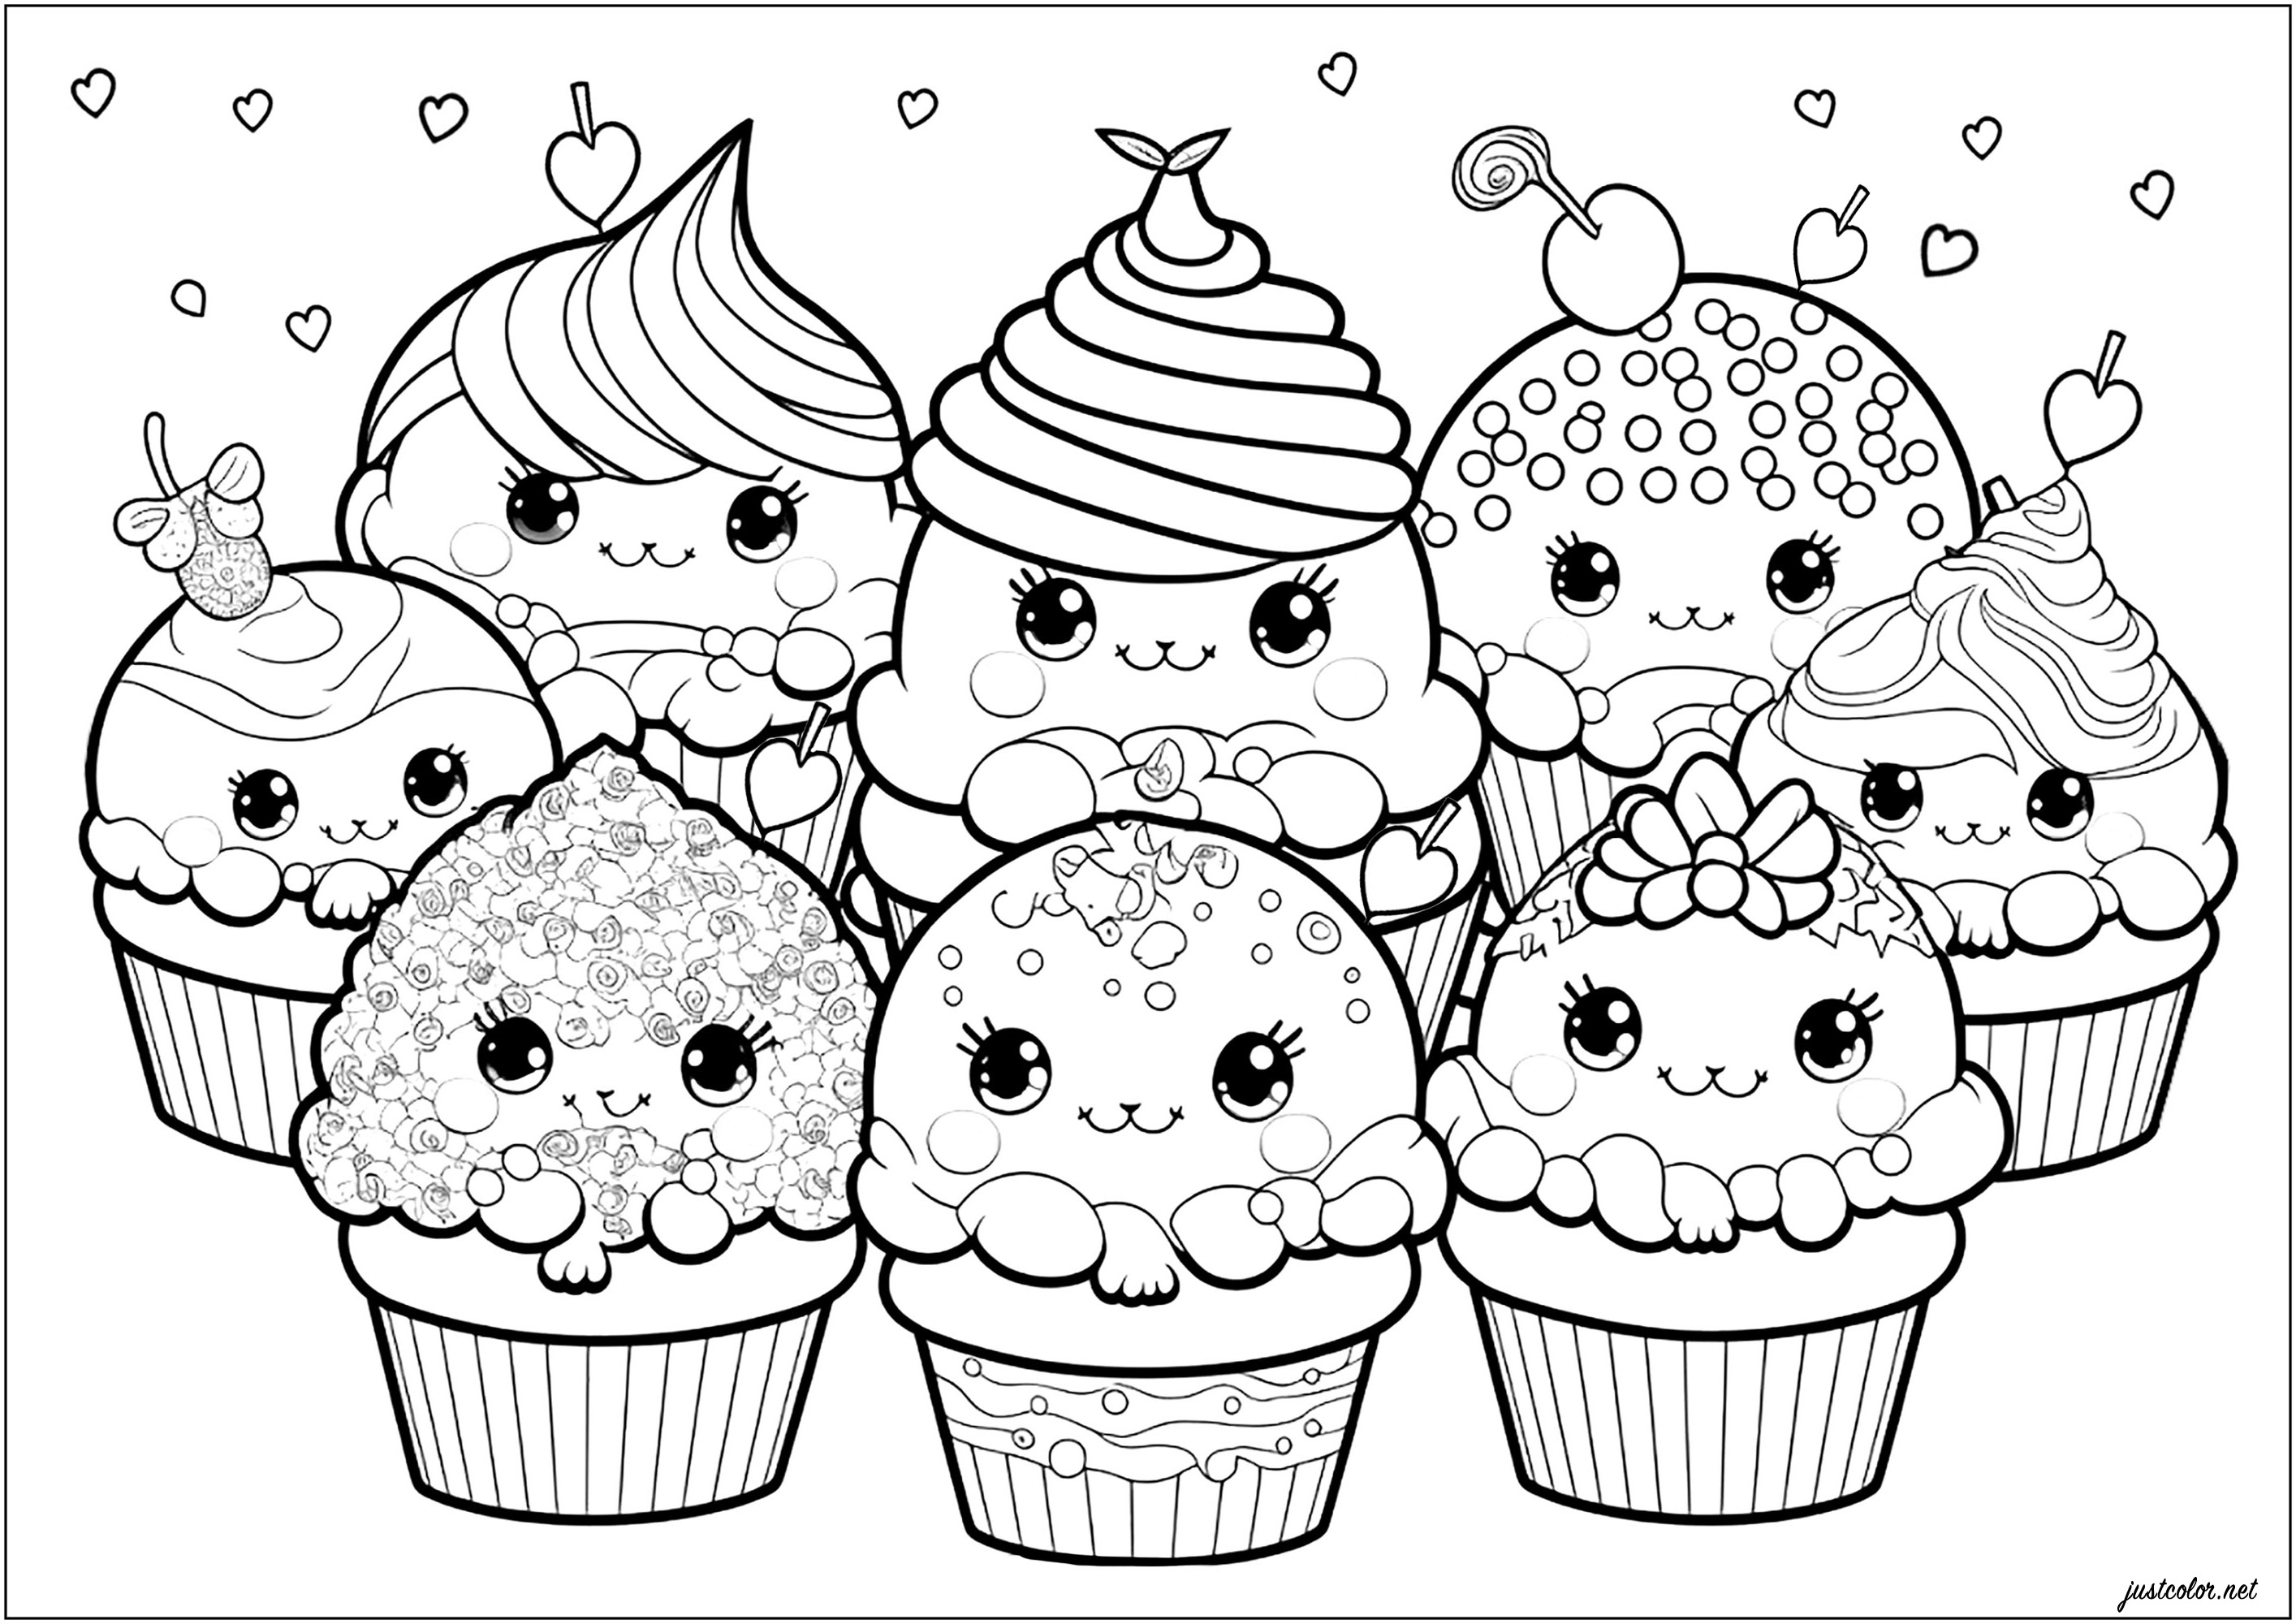 Cupcake ispirati ai personaggi Kawaii